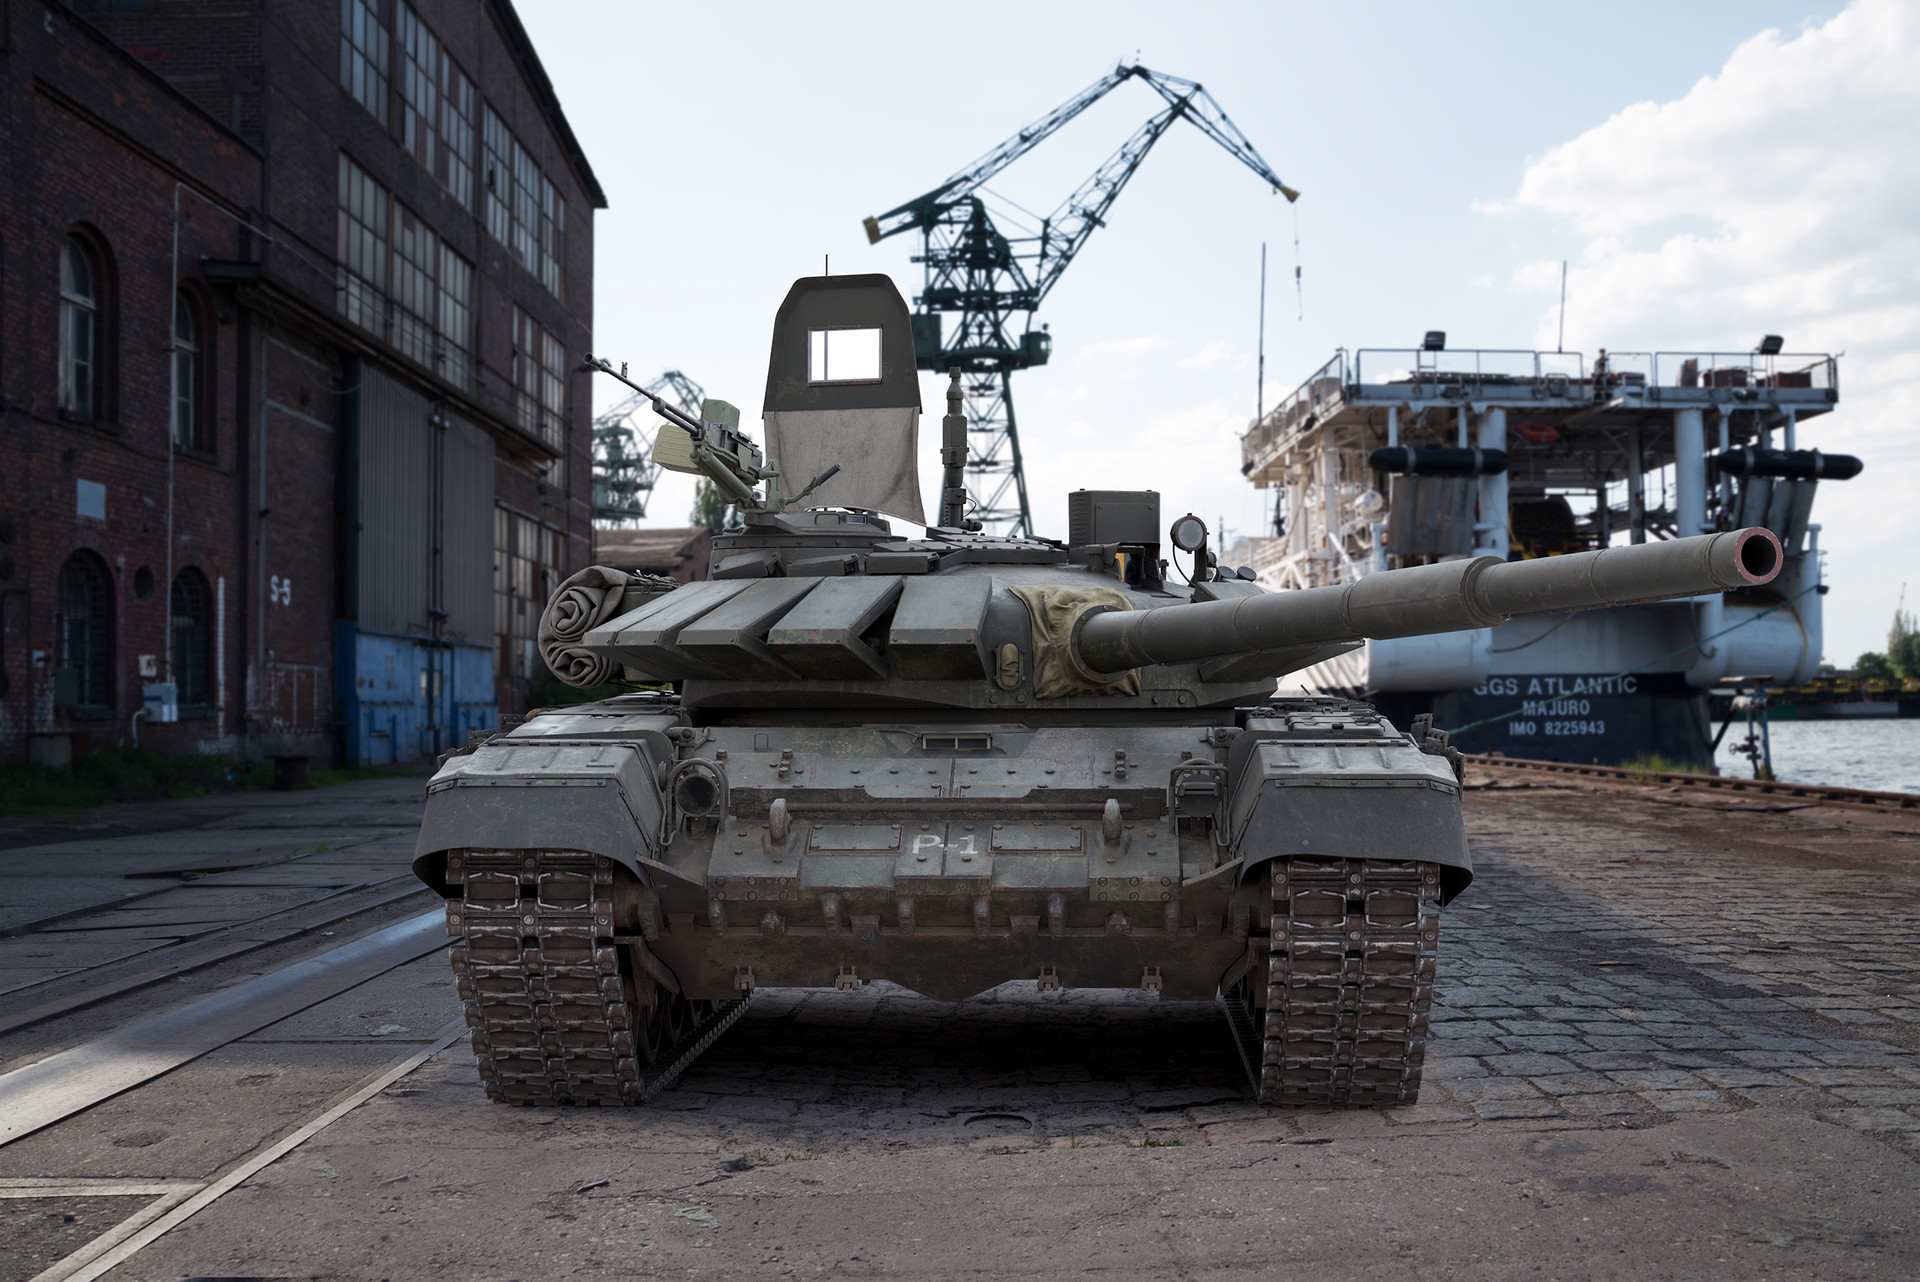 Alexandr Gladysh T 72b3 Soviet Union Main Battle Tank Vray Materials Created In 18